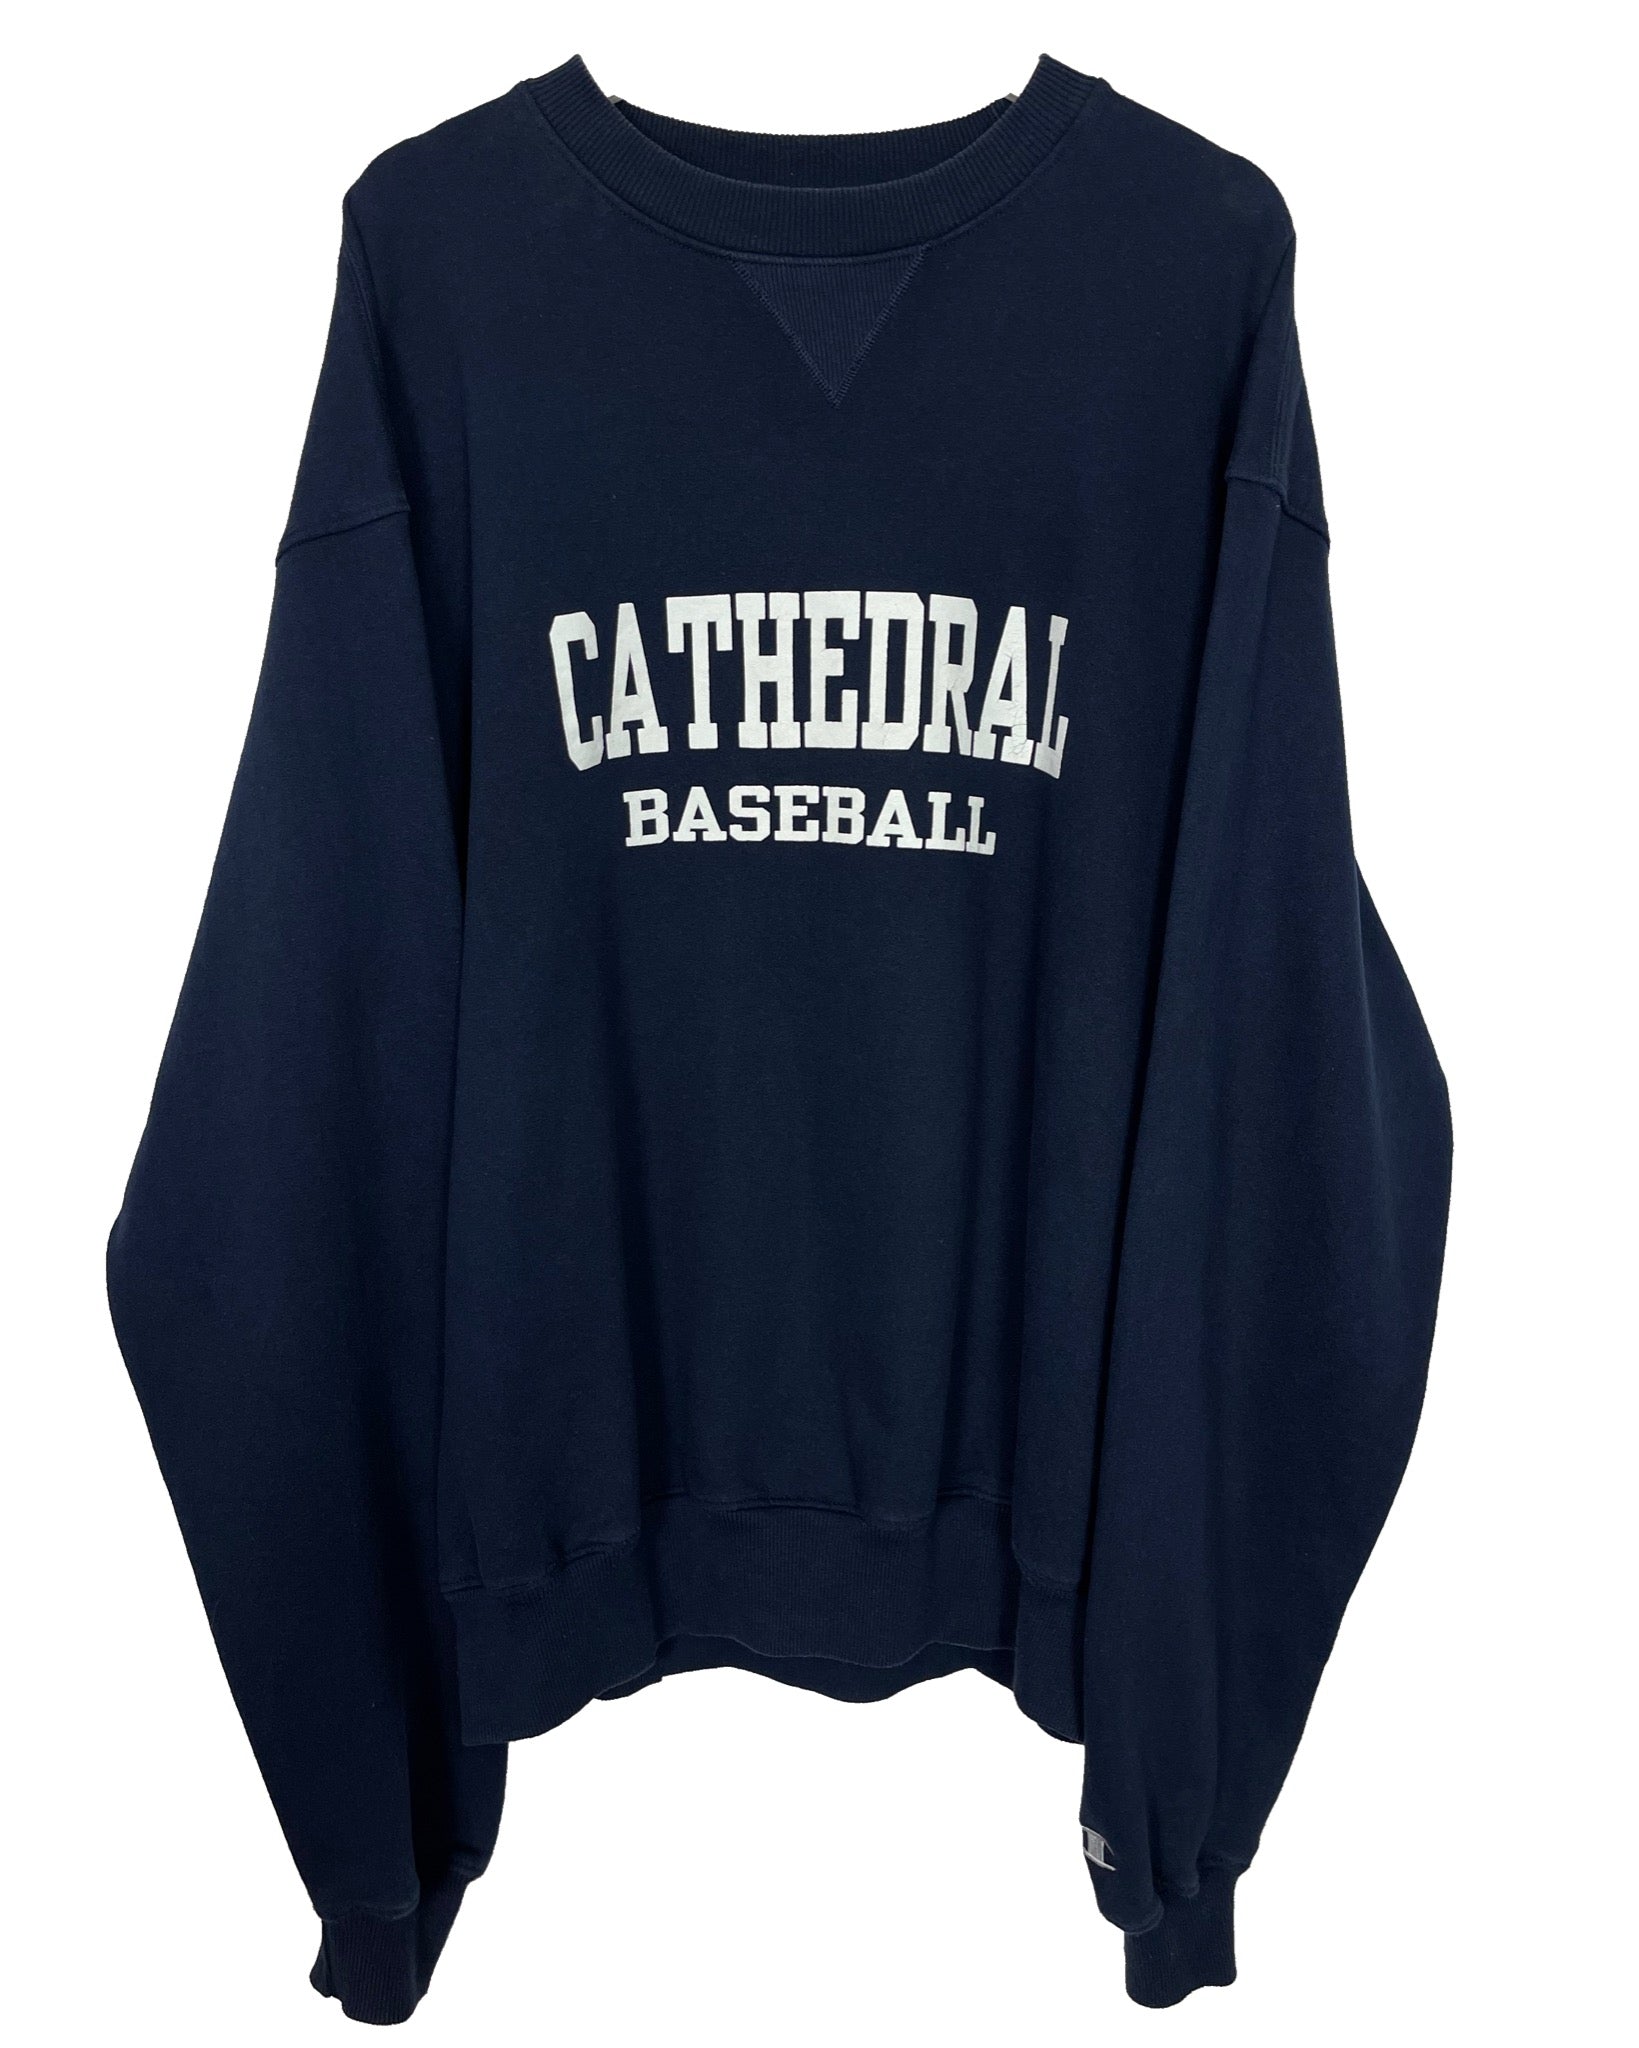  Sweatshirt Champion Sweat - Cathedral Baseball - XL - PLOMOSTORE